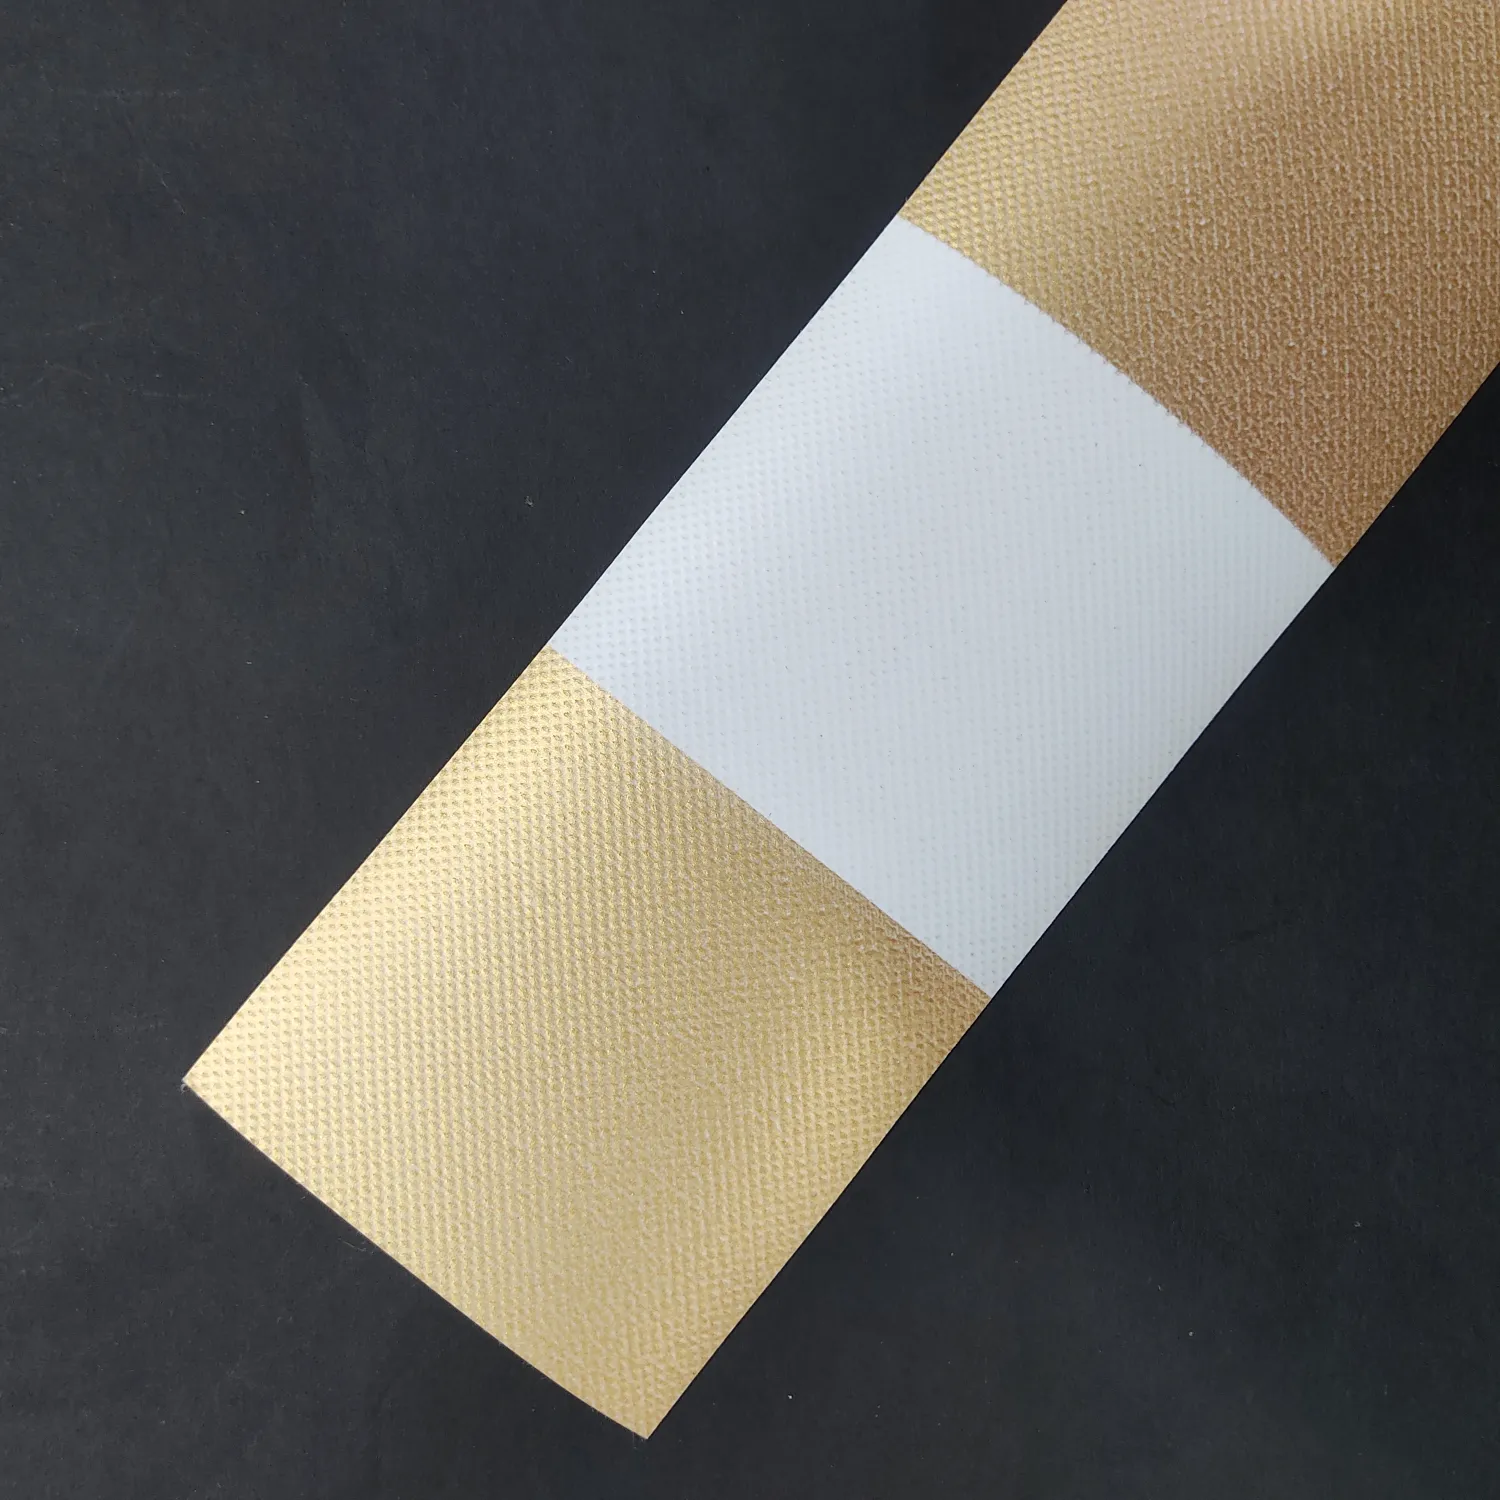 CSC PVC Fabric back(White,gold)